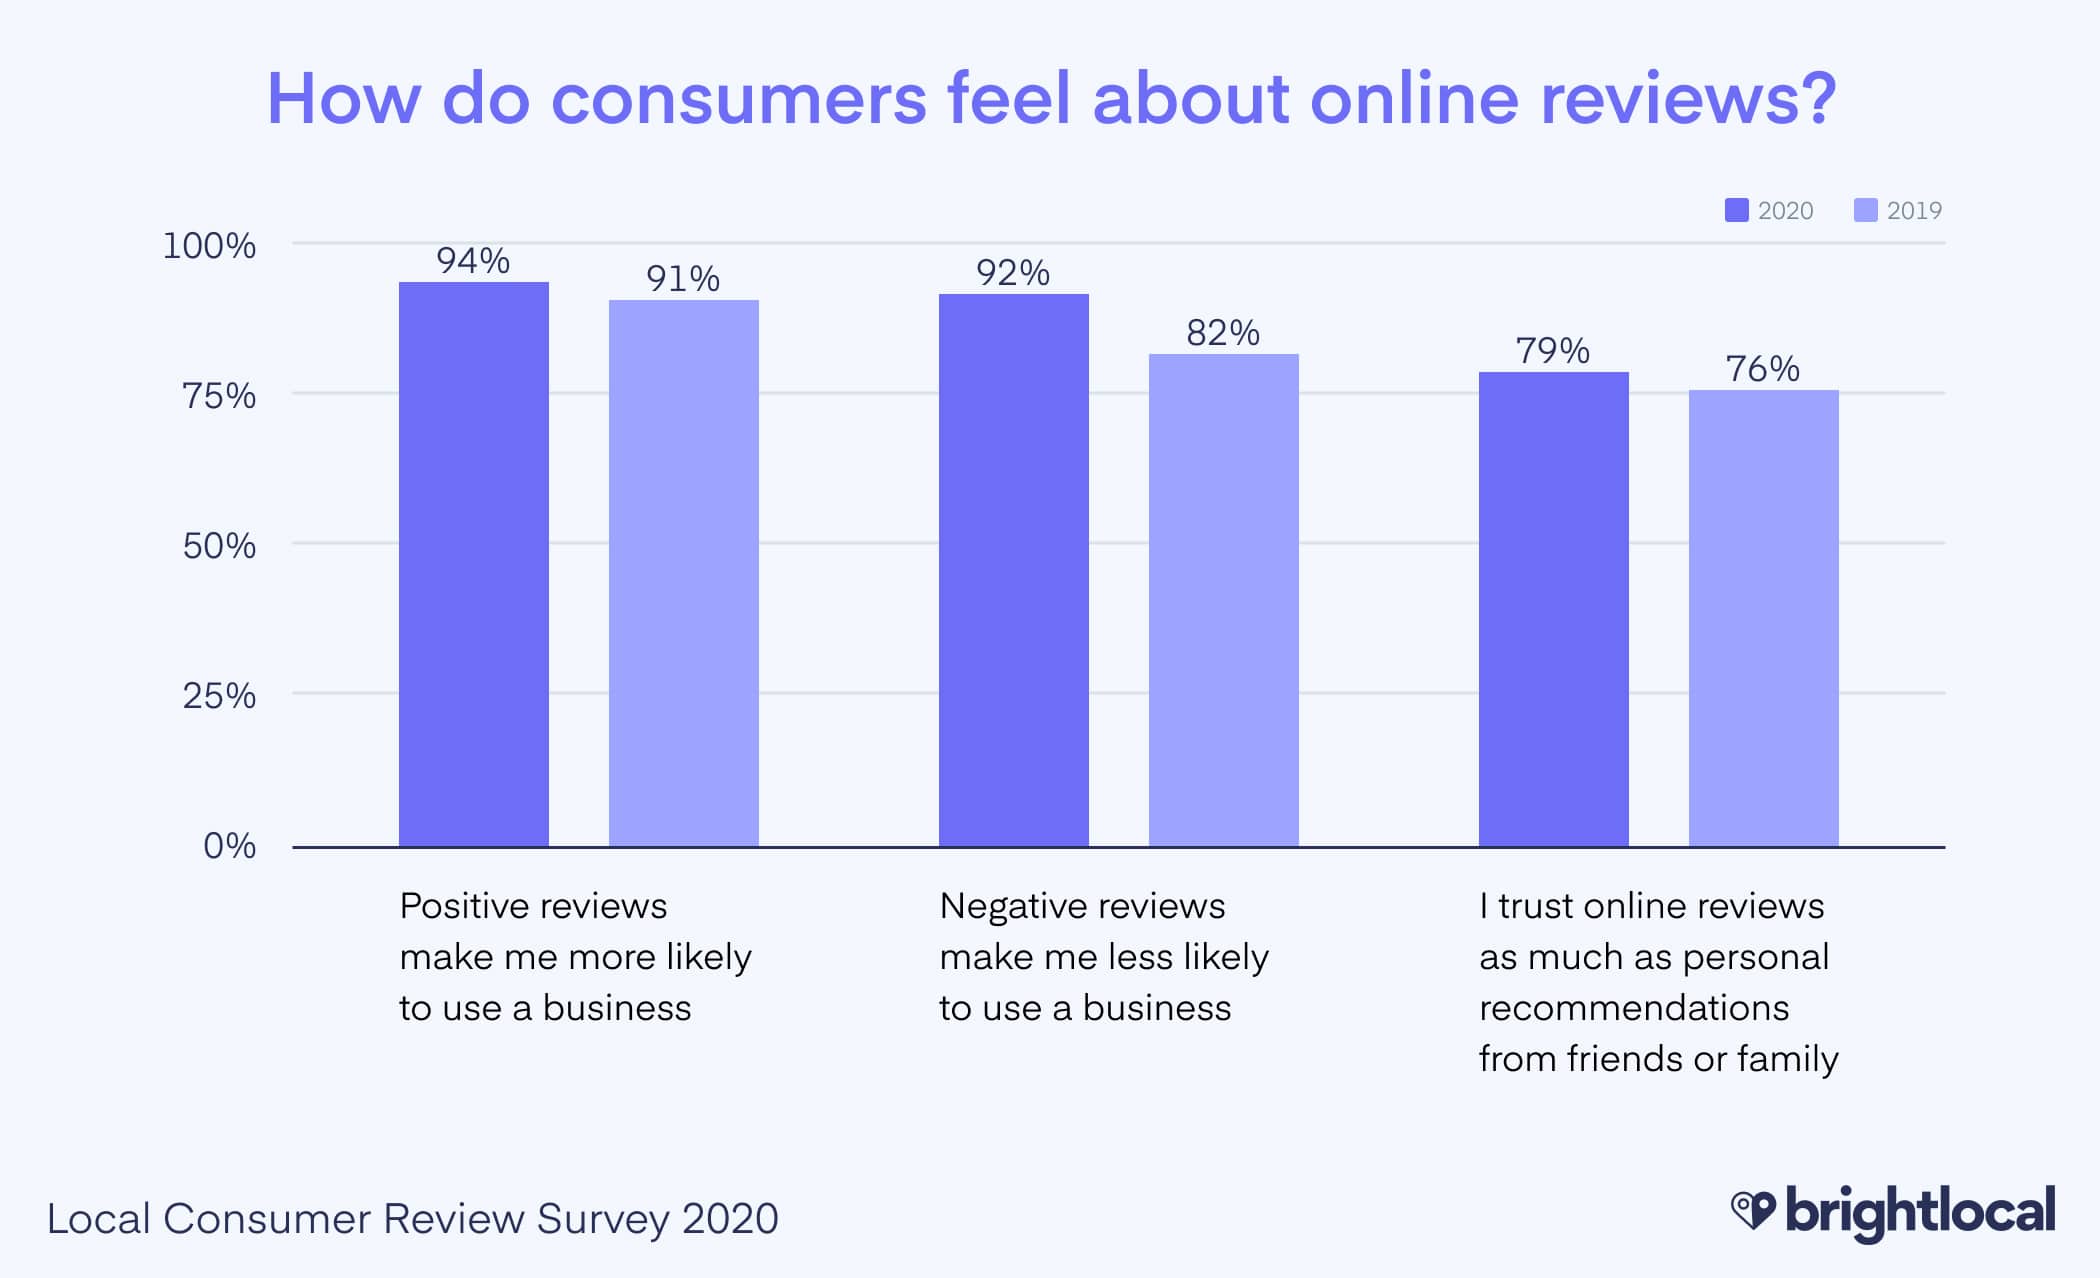 Local consumer review survey 2020